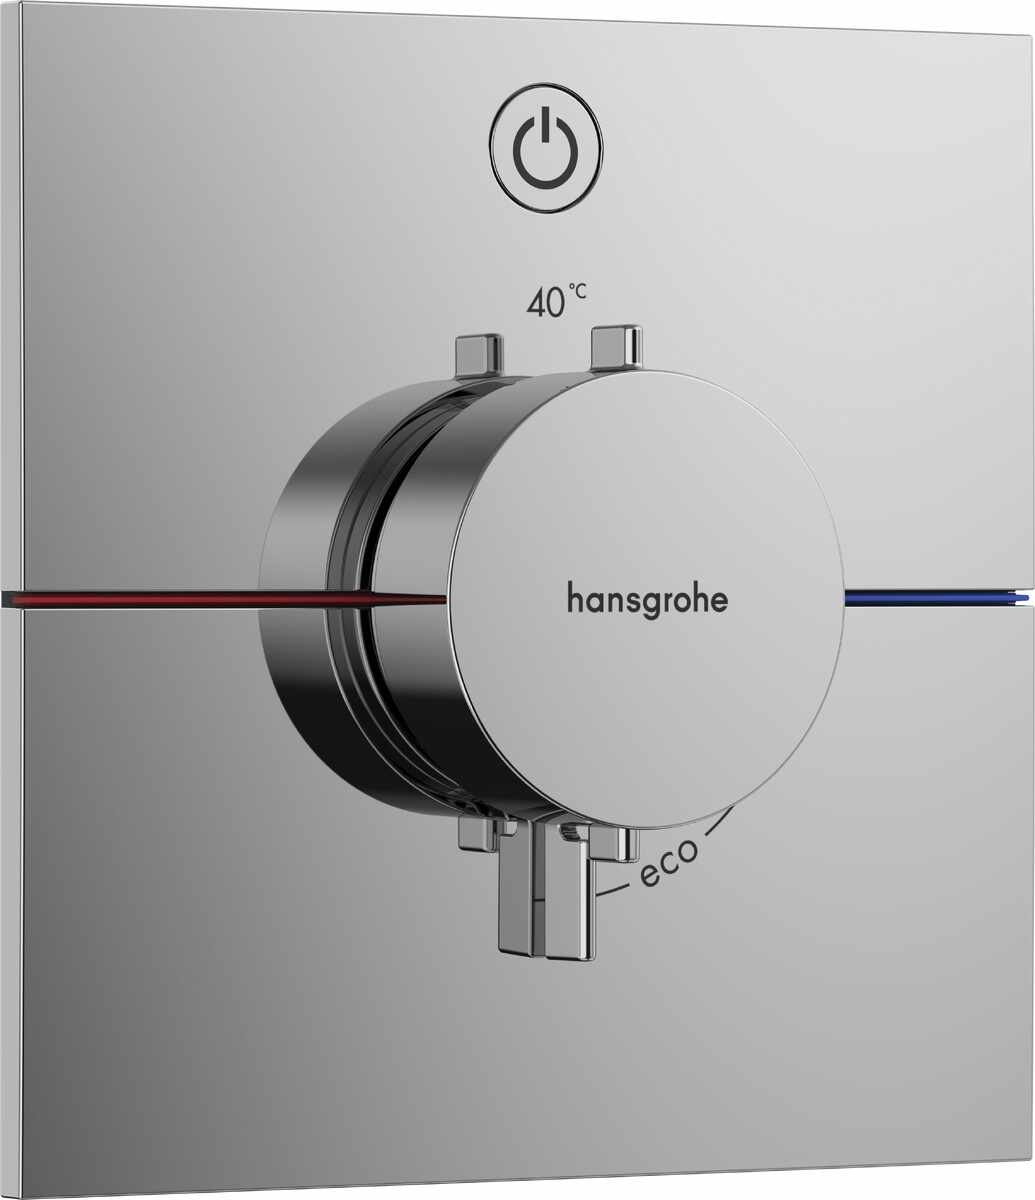 Baterie dus termostatata Hansgrohe ShowerSelect Comfort E On/Off cu montaj incastrat necesita corp ingropat crom